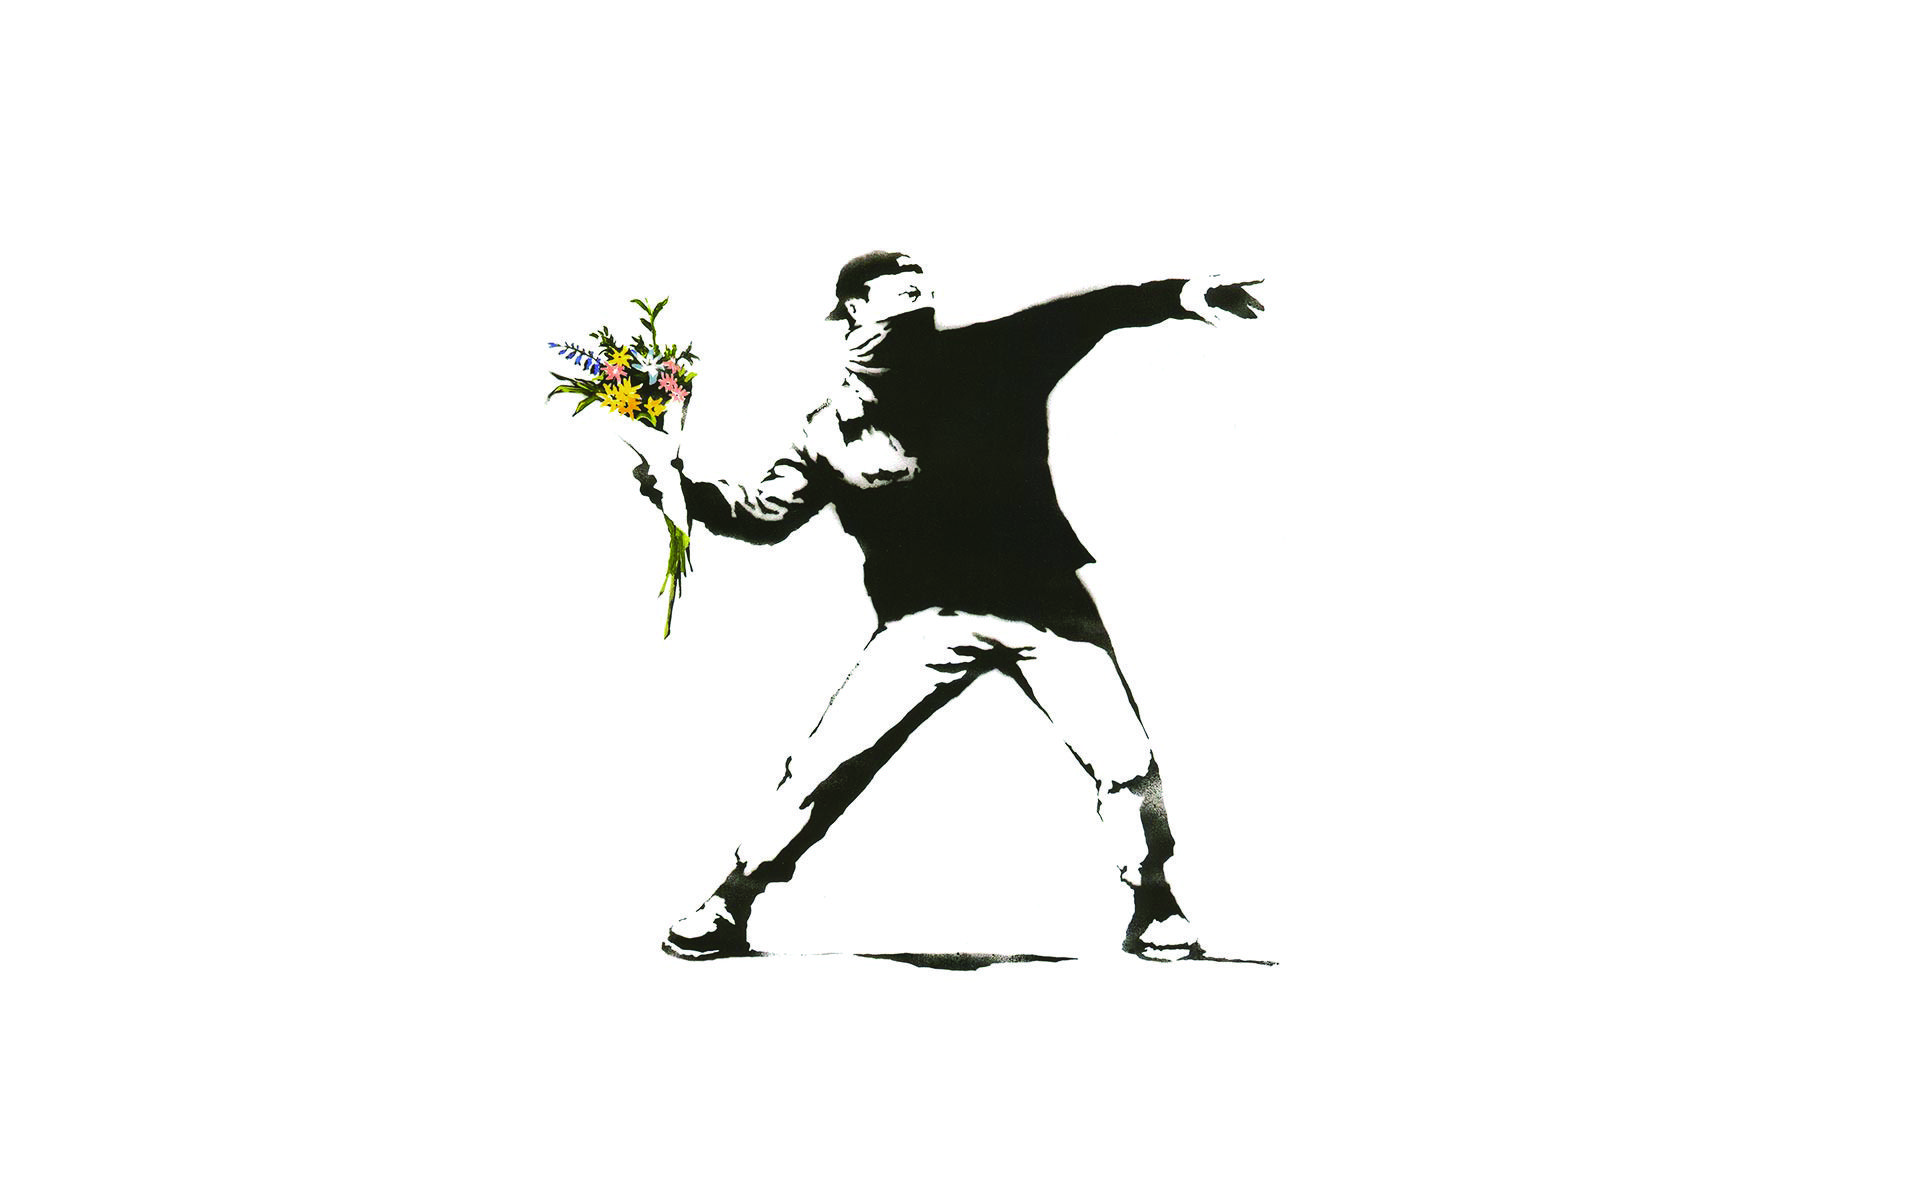 Fonds d'écran Banksy : tous les wallpapers Banksy